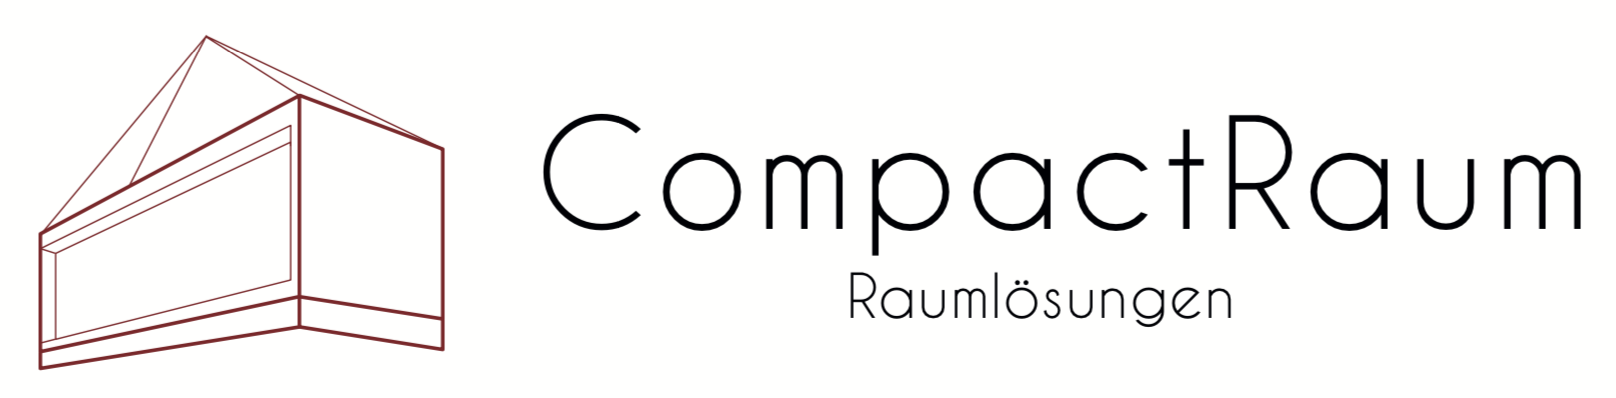 compactraum logo